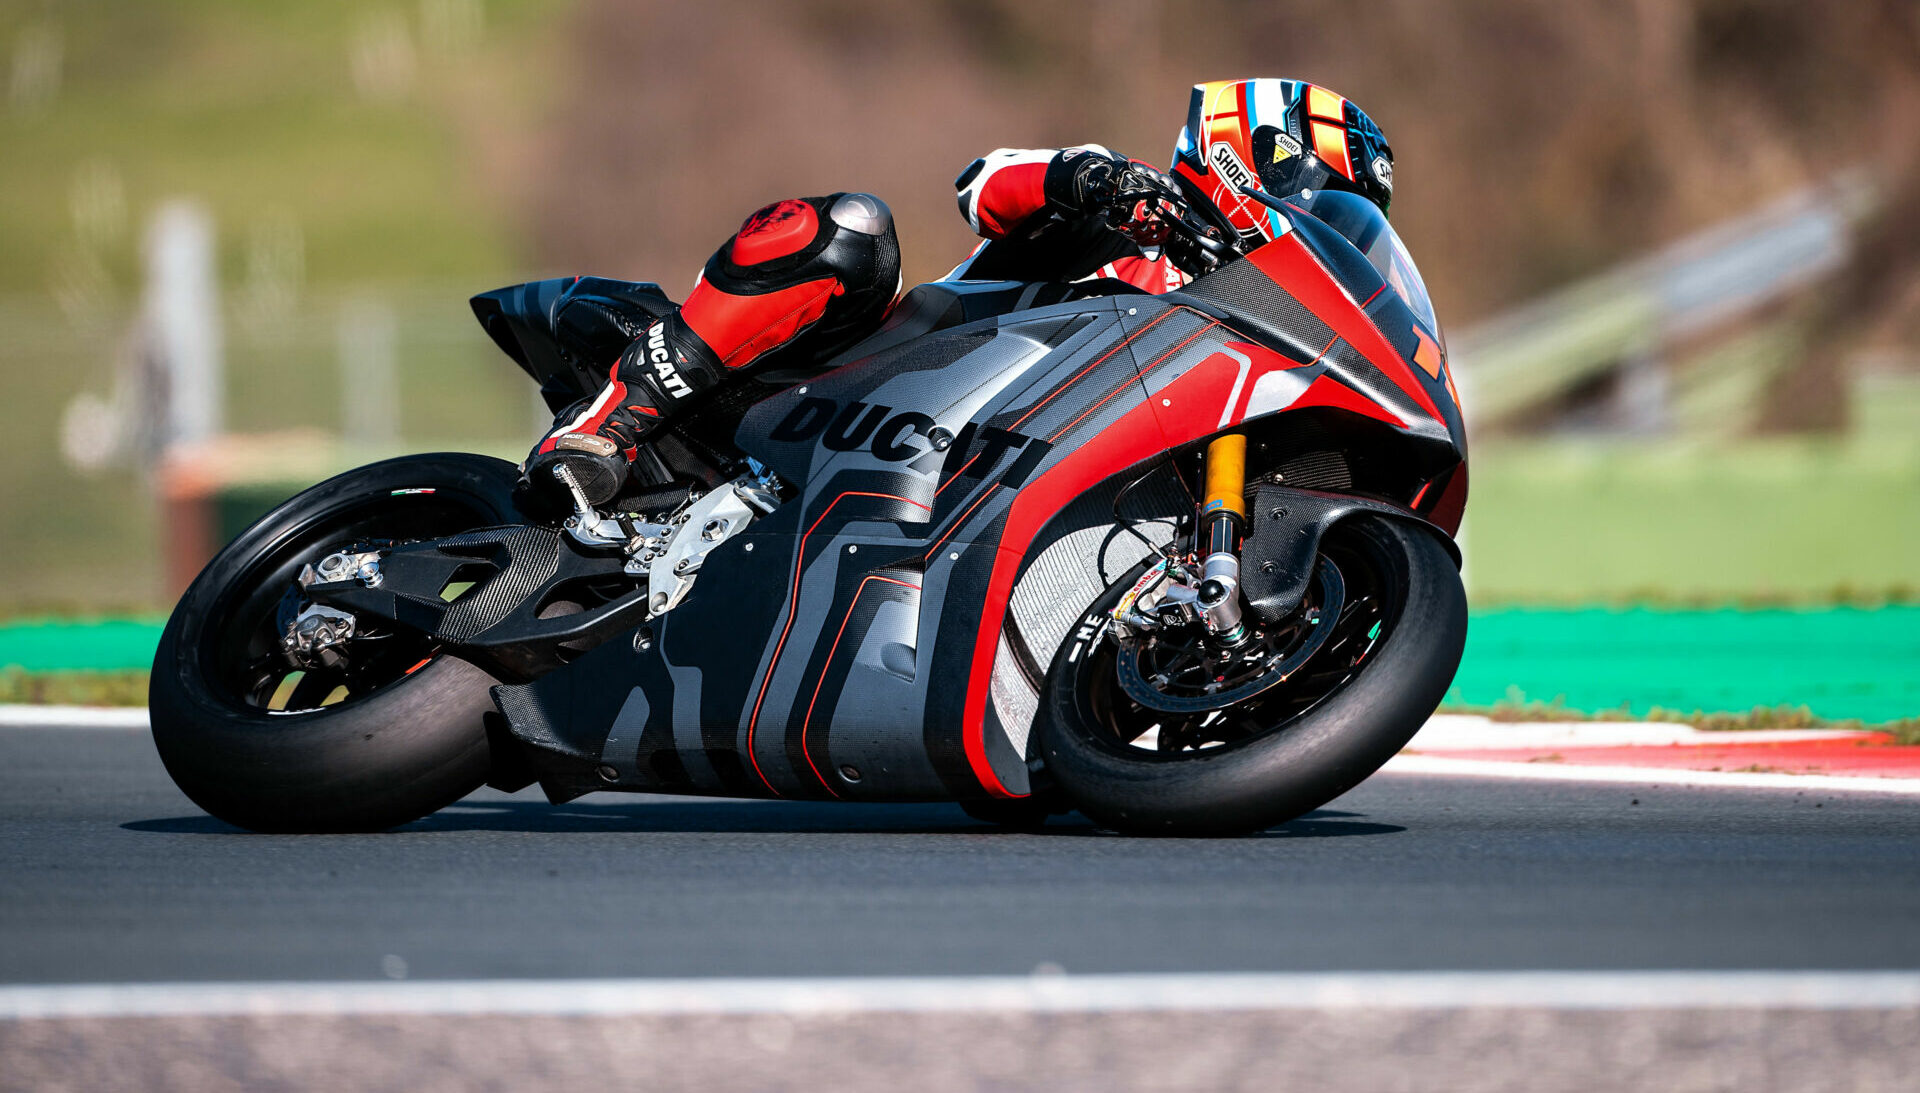 Test rider Alex De Angelis at speed on the Ducati MotoE prototype. Photo courtesy Ducati.